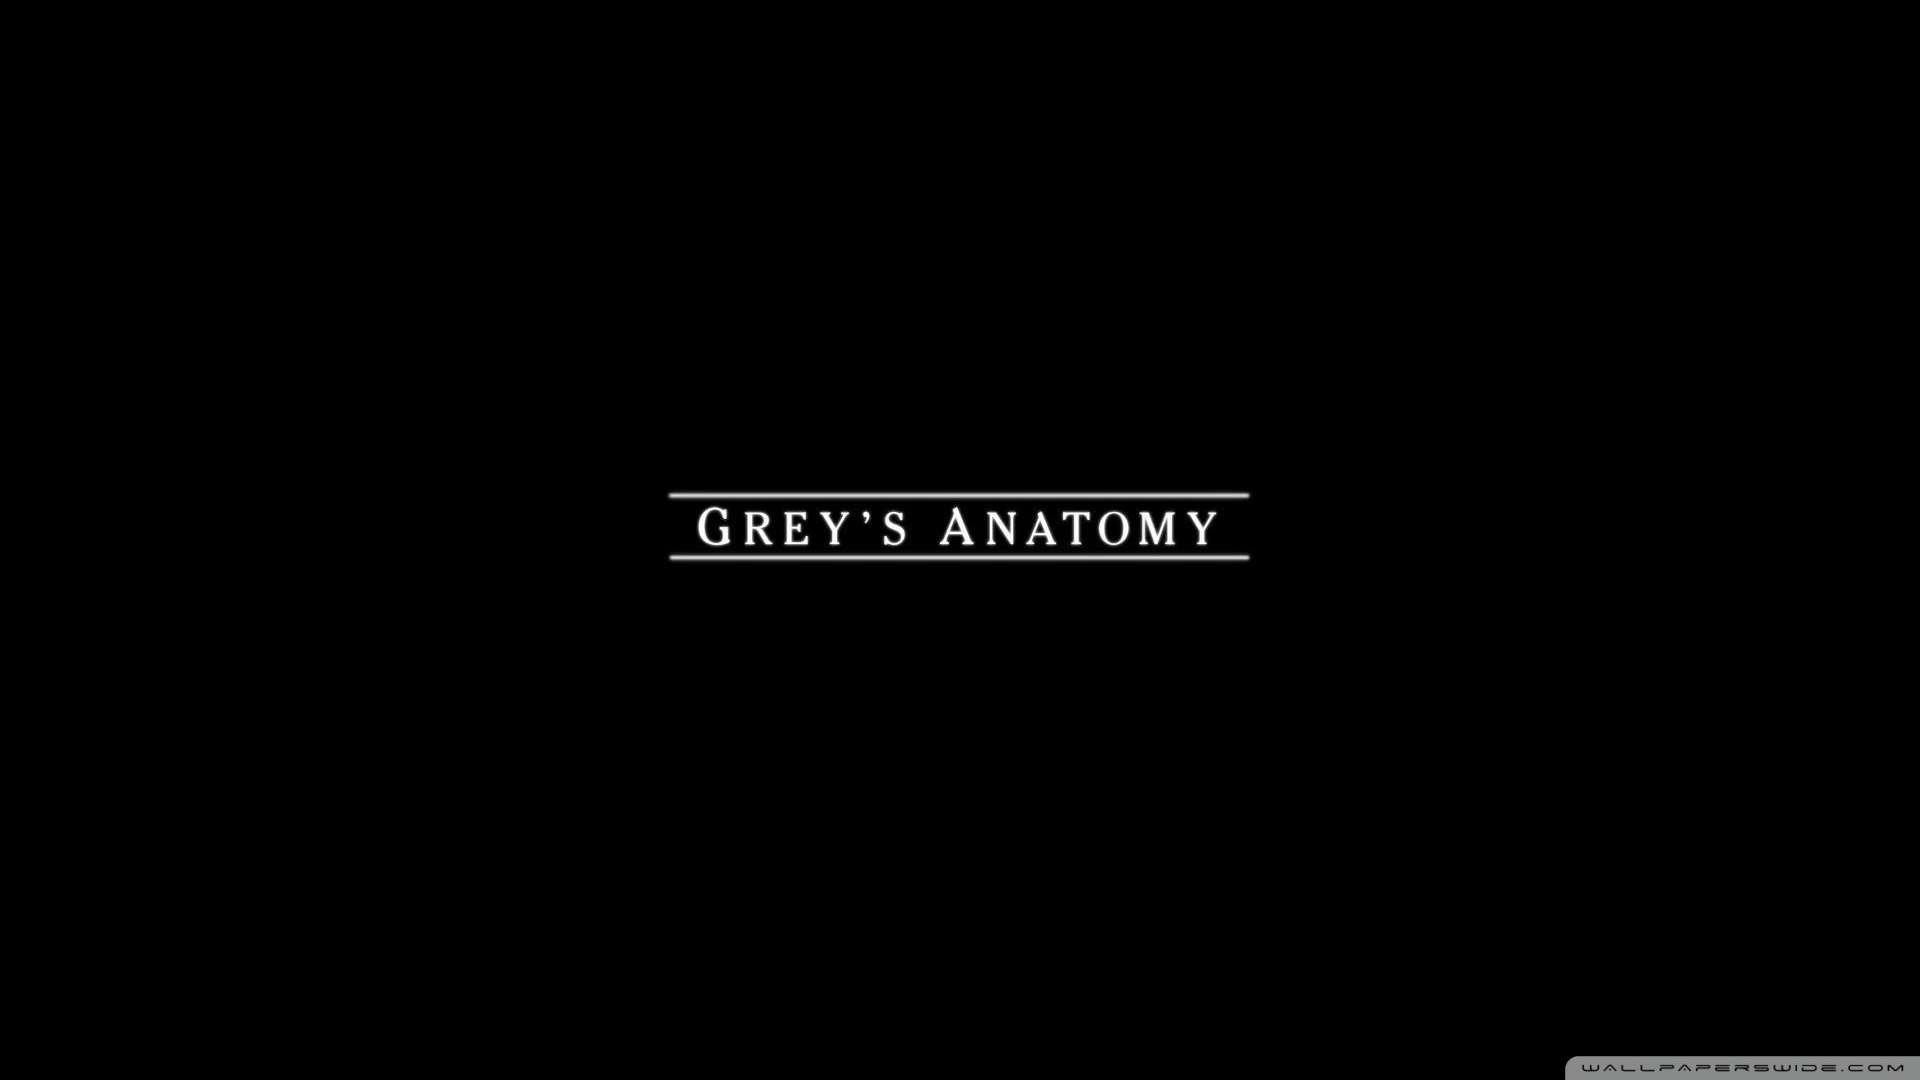 Greys Anatomy Wallpaper Hd Wallpapers